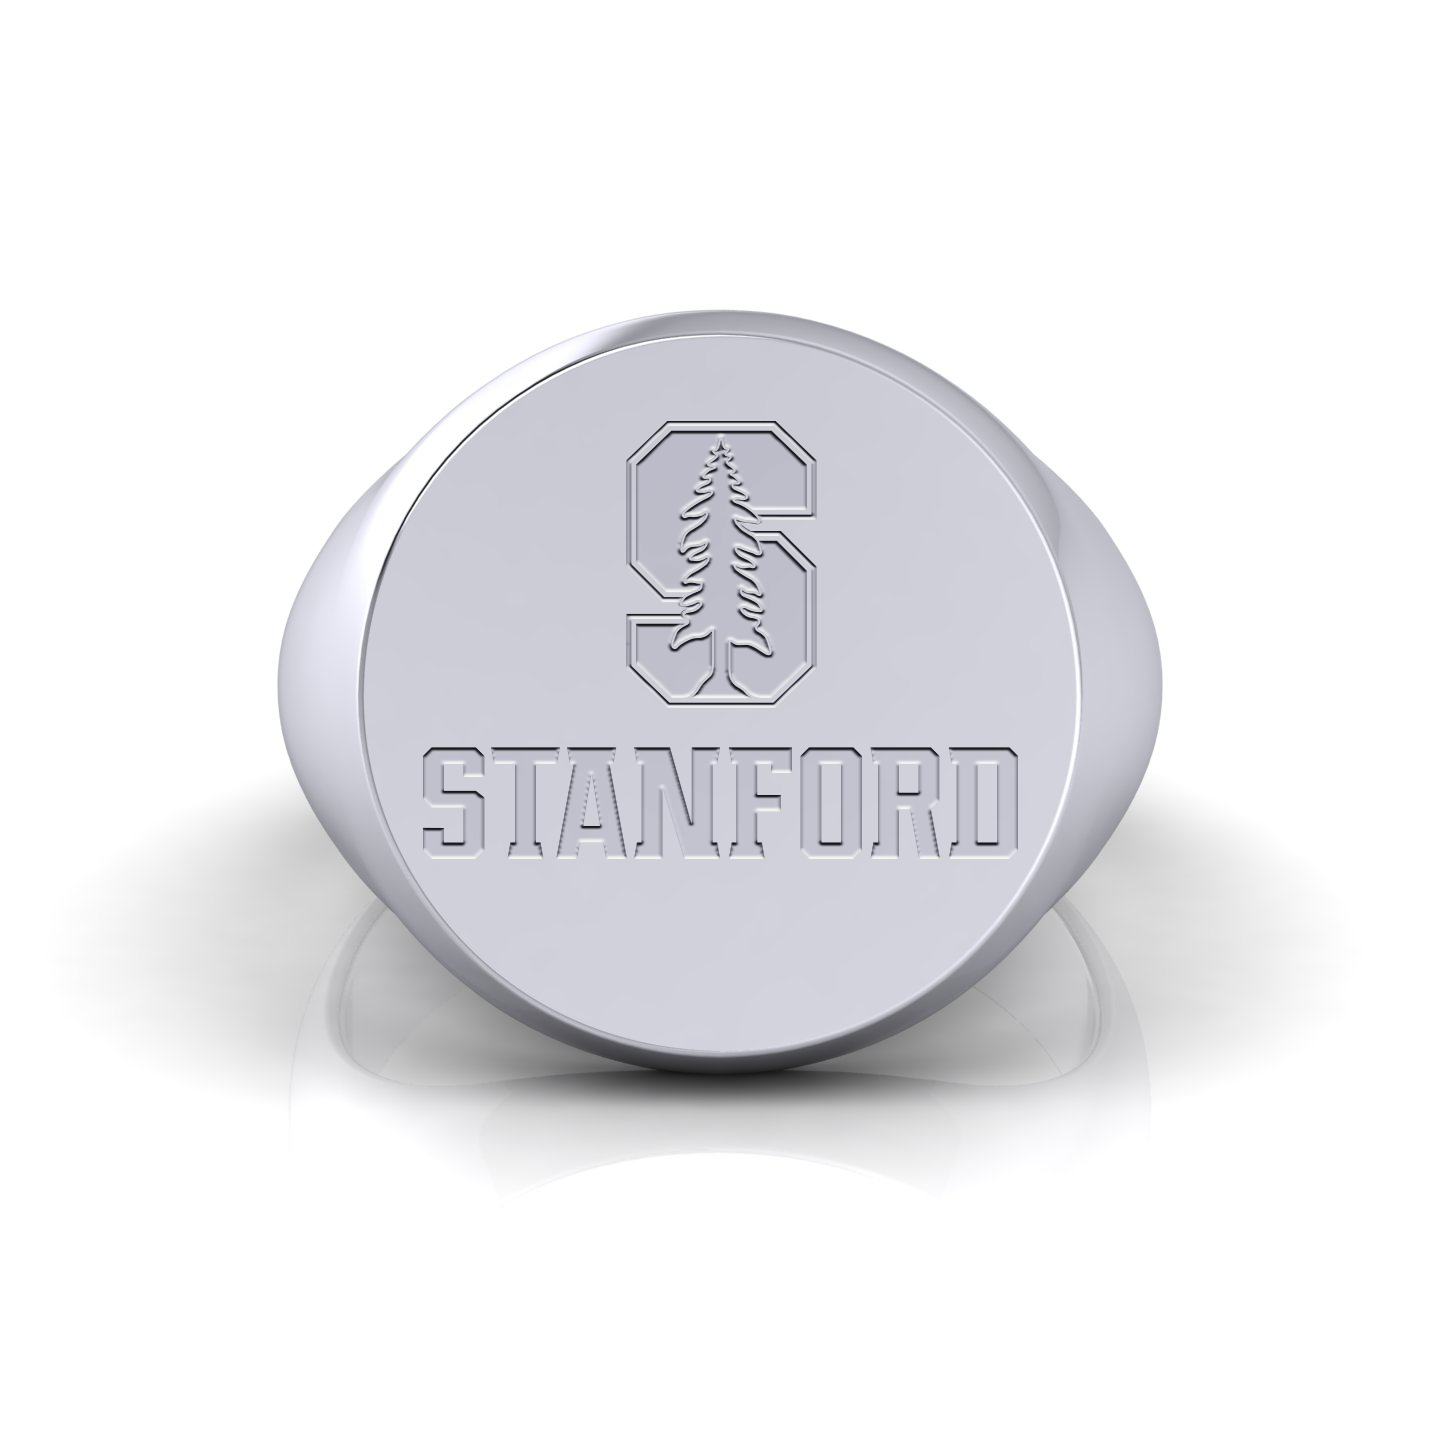 Stanford Round Signet Ring